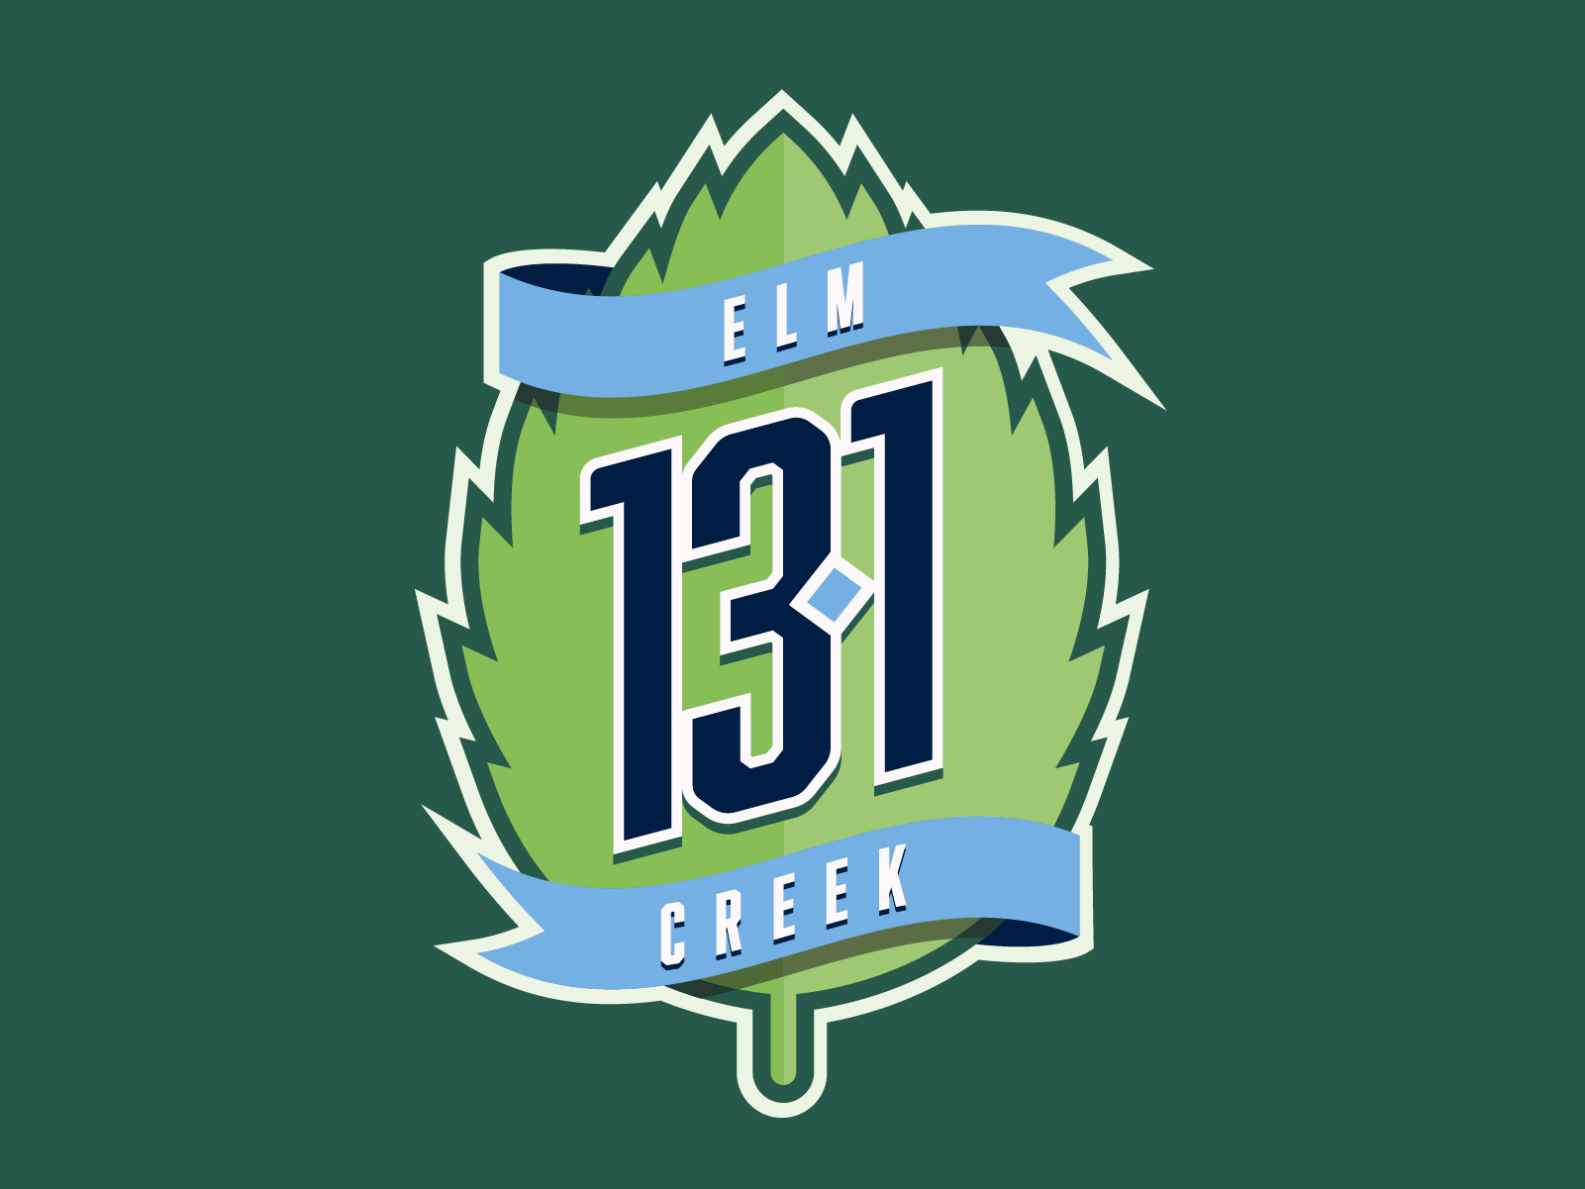 Elm Creek Half Marathon by Drew Elrick on Dribbble